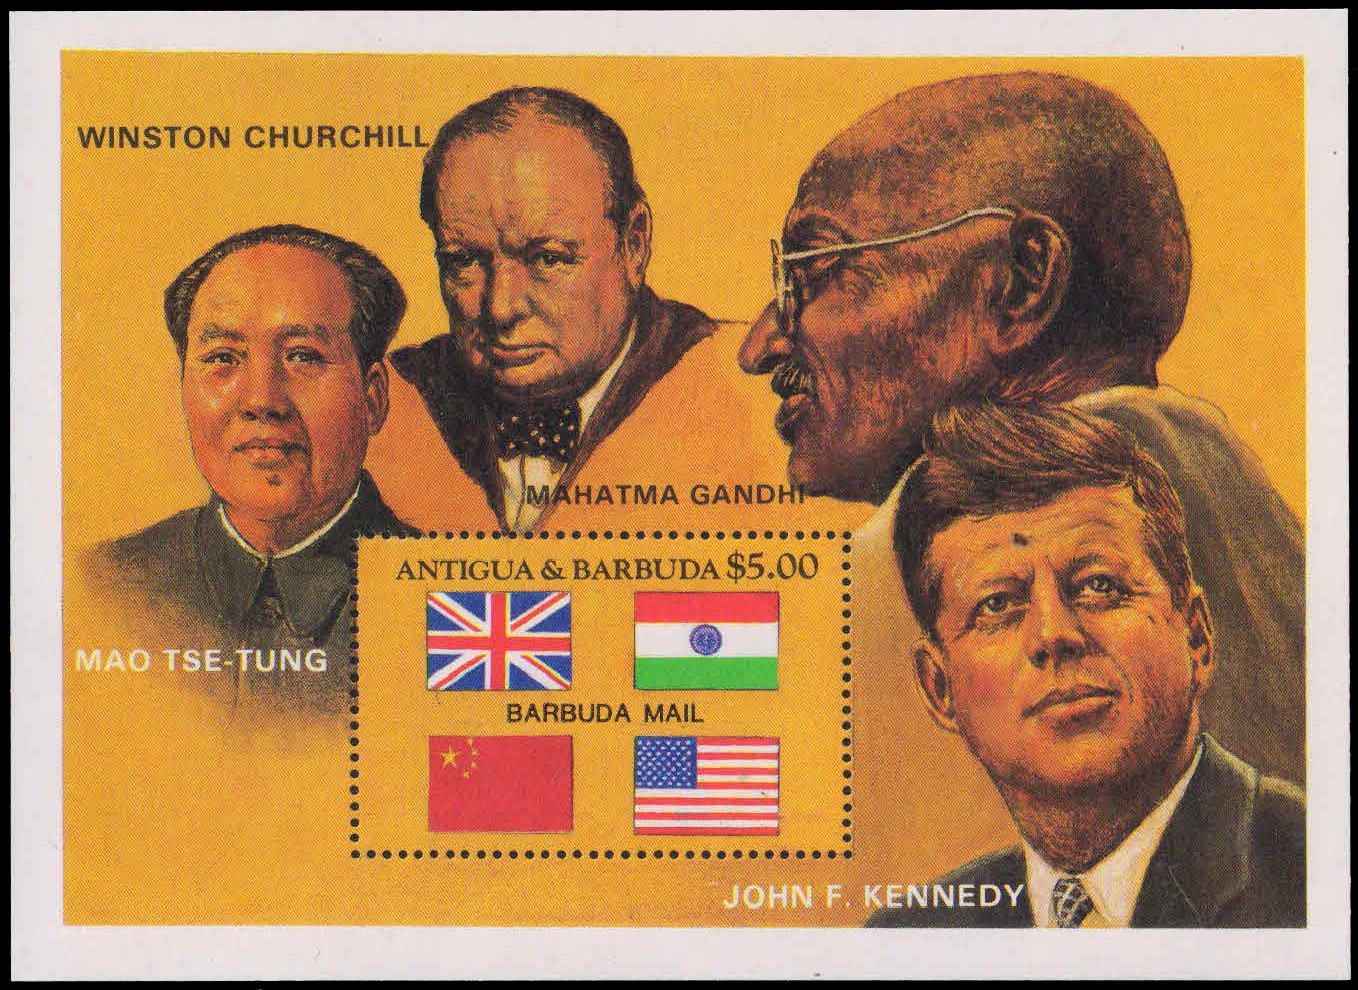 ANTIGUA & BARBUDA-Mahatma Gandhi, Churchill, Kennedy, Flags-Miniature Sheet